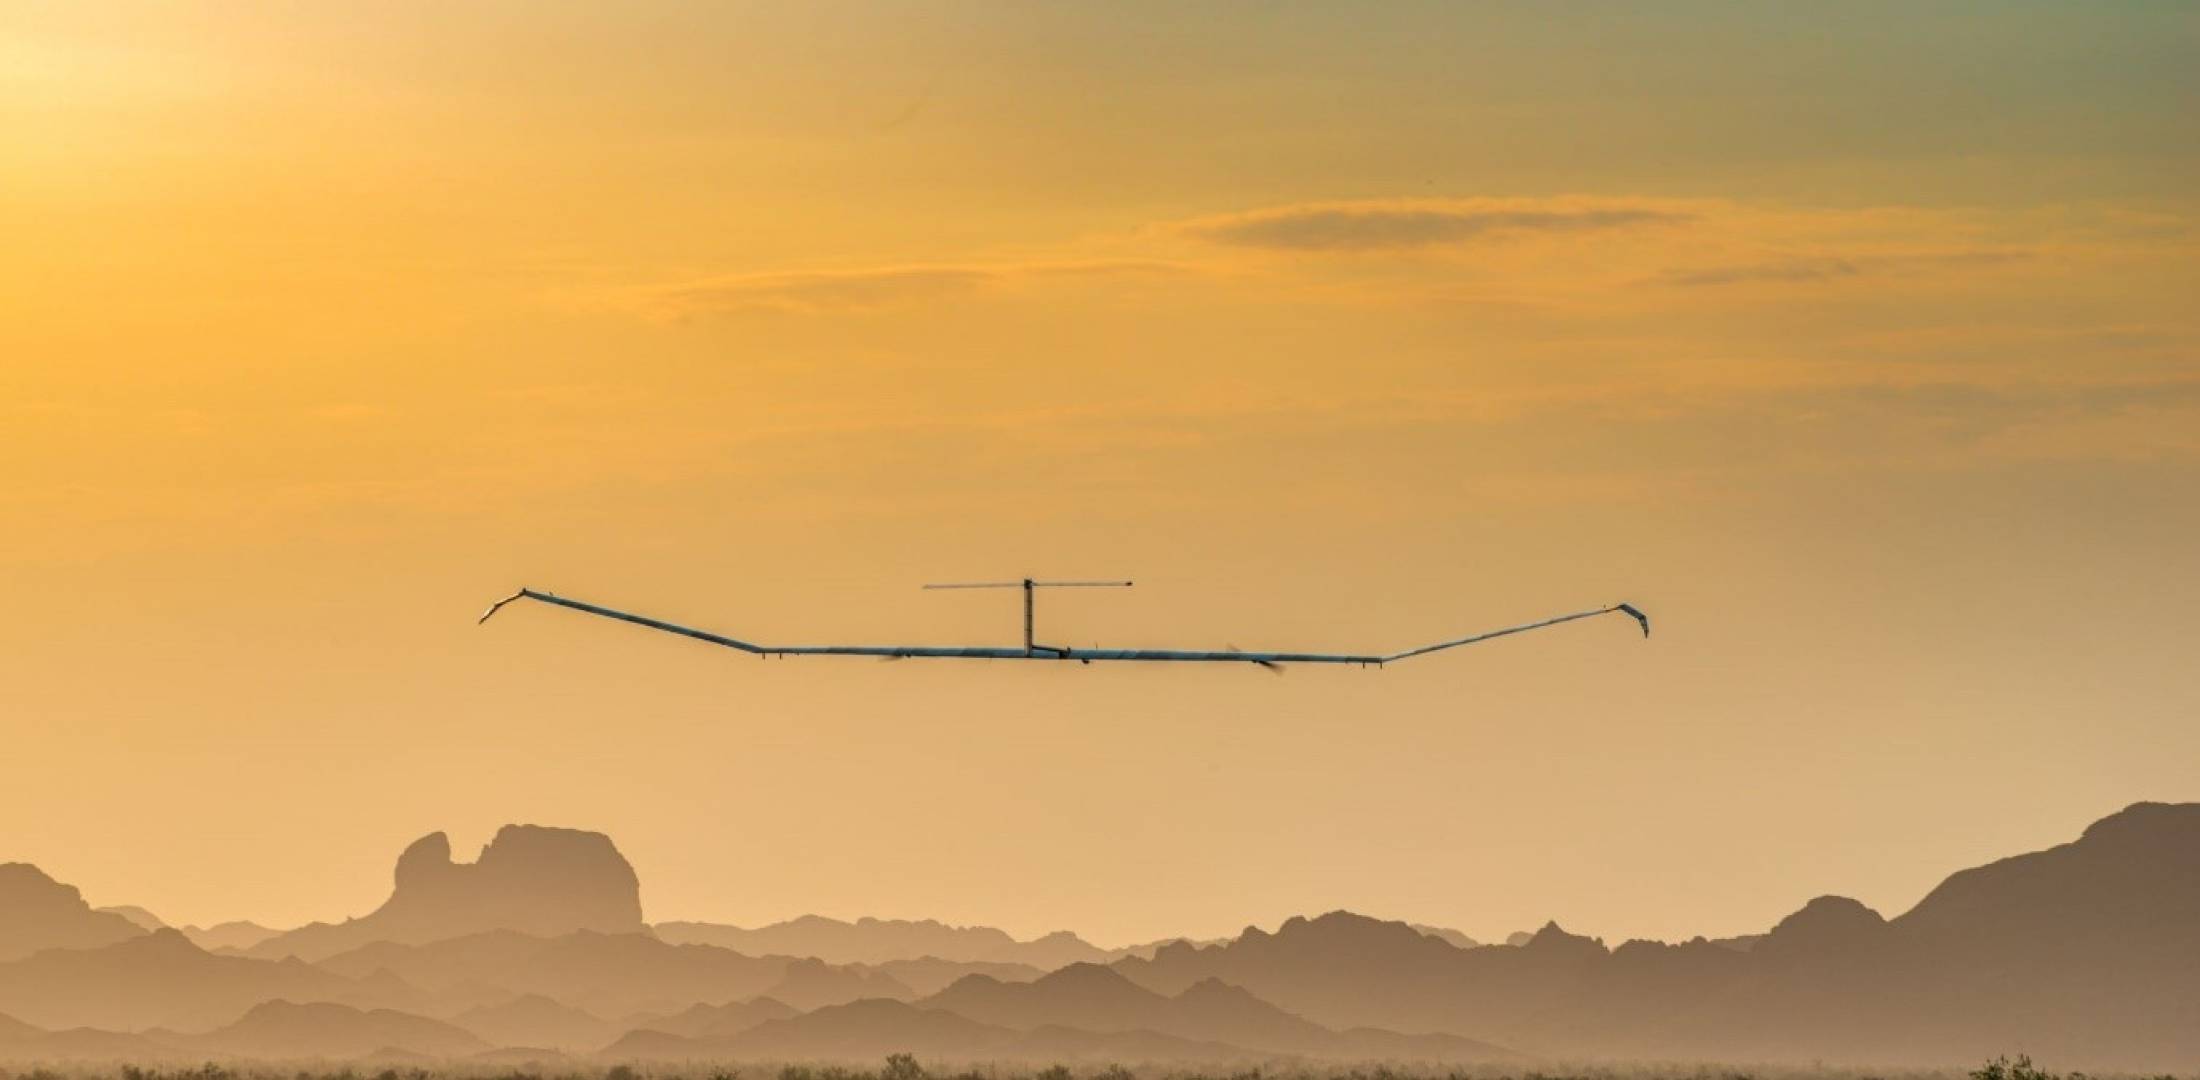 Airbus Zephyr solar-powered high-altitude aircraft